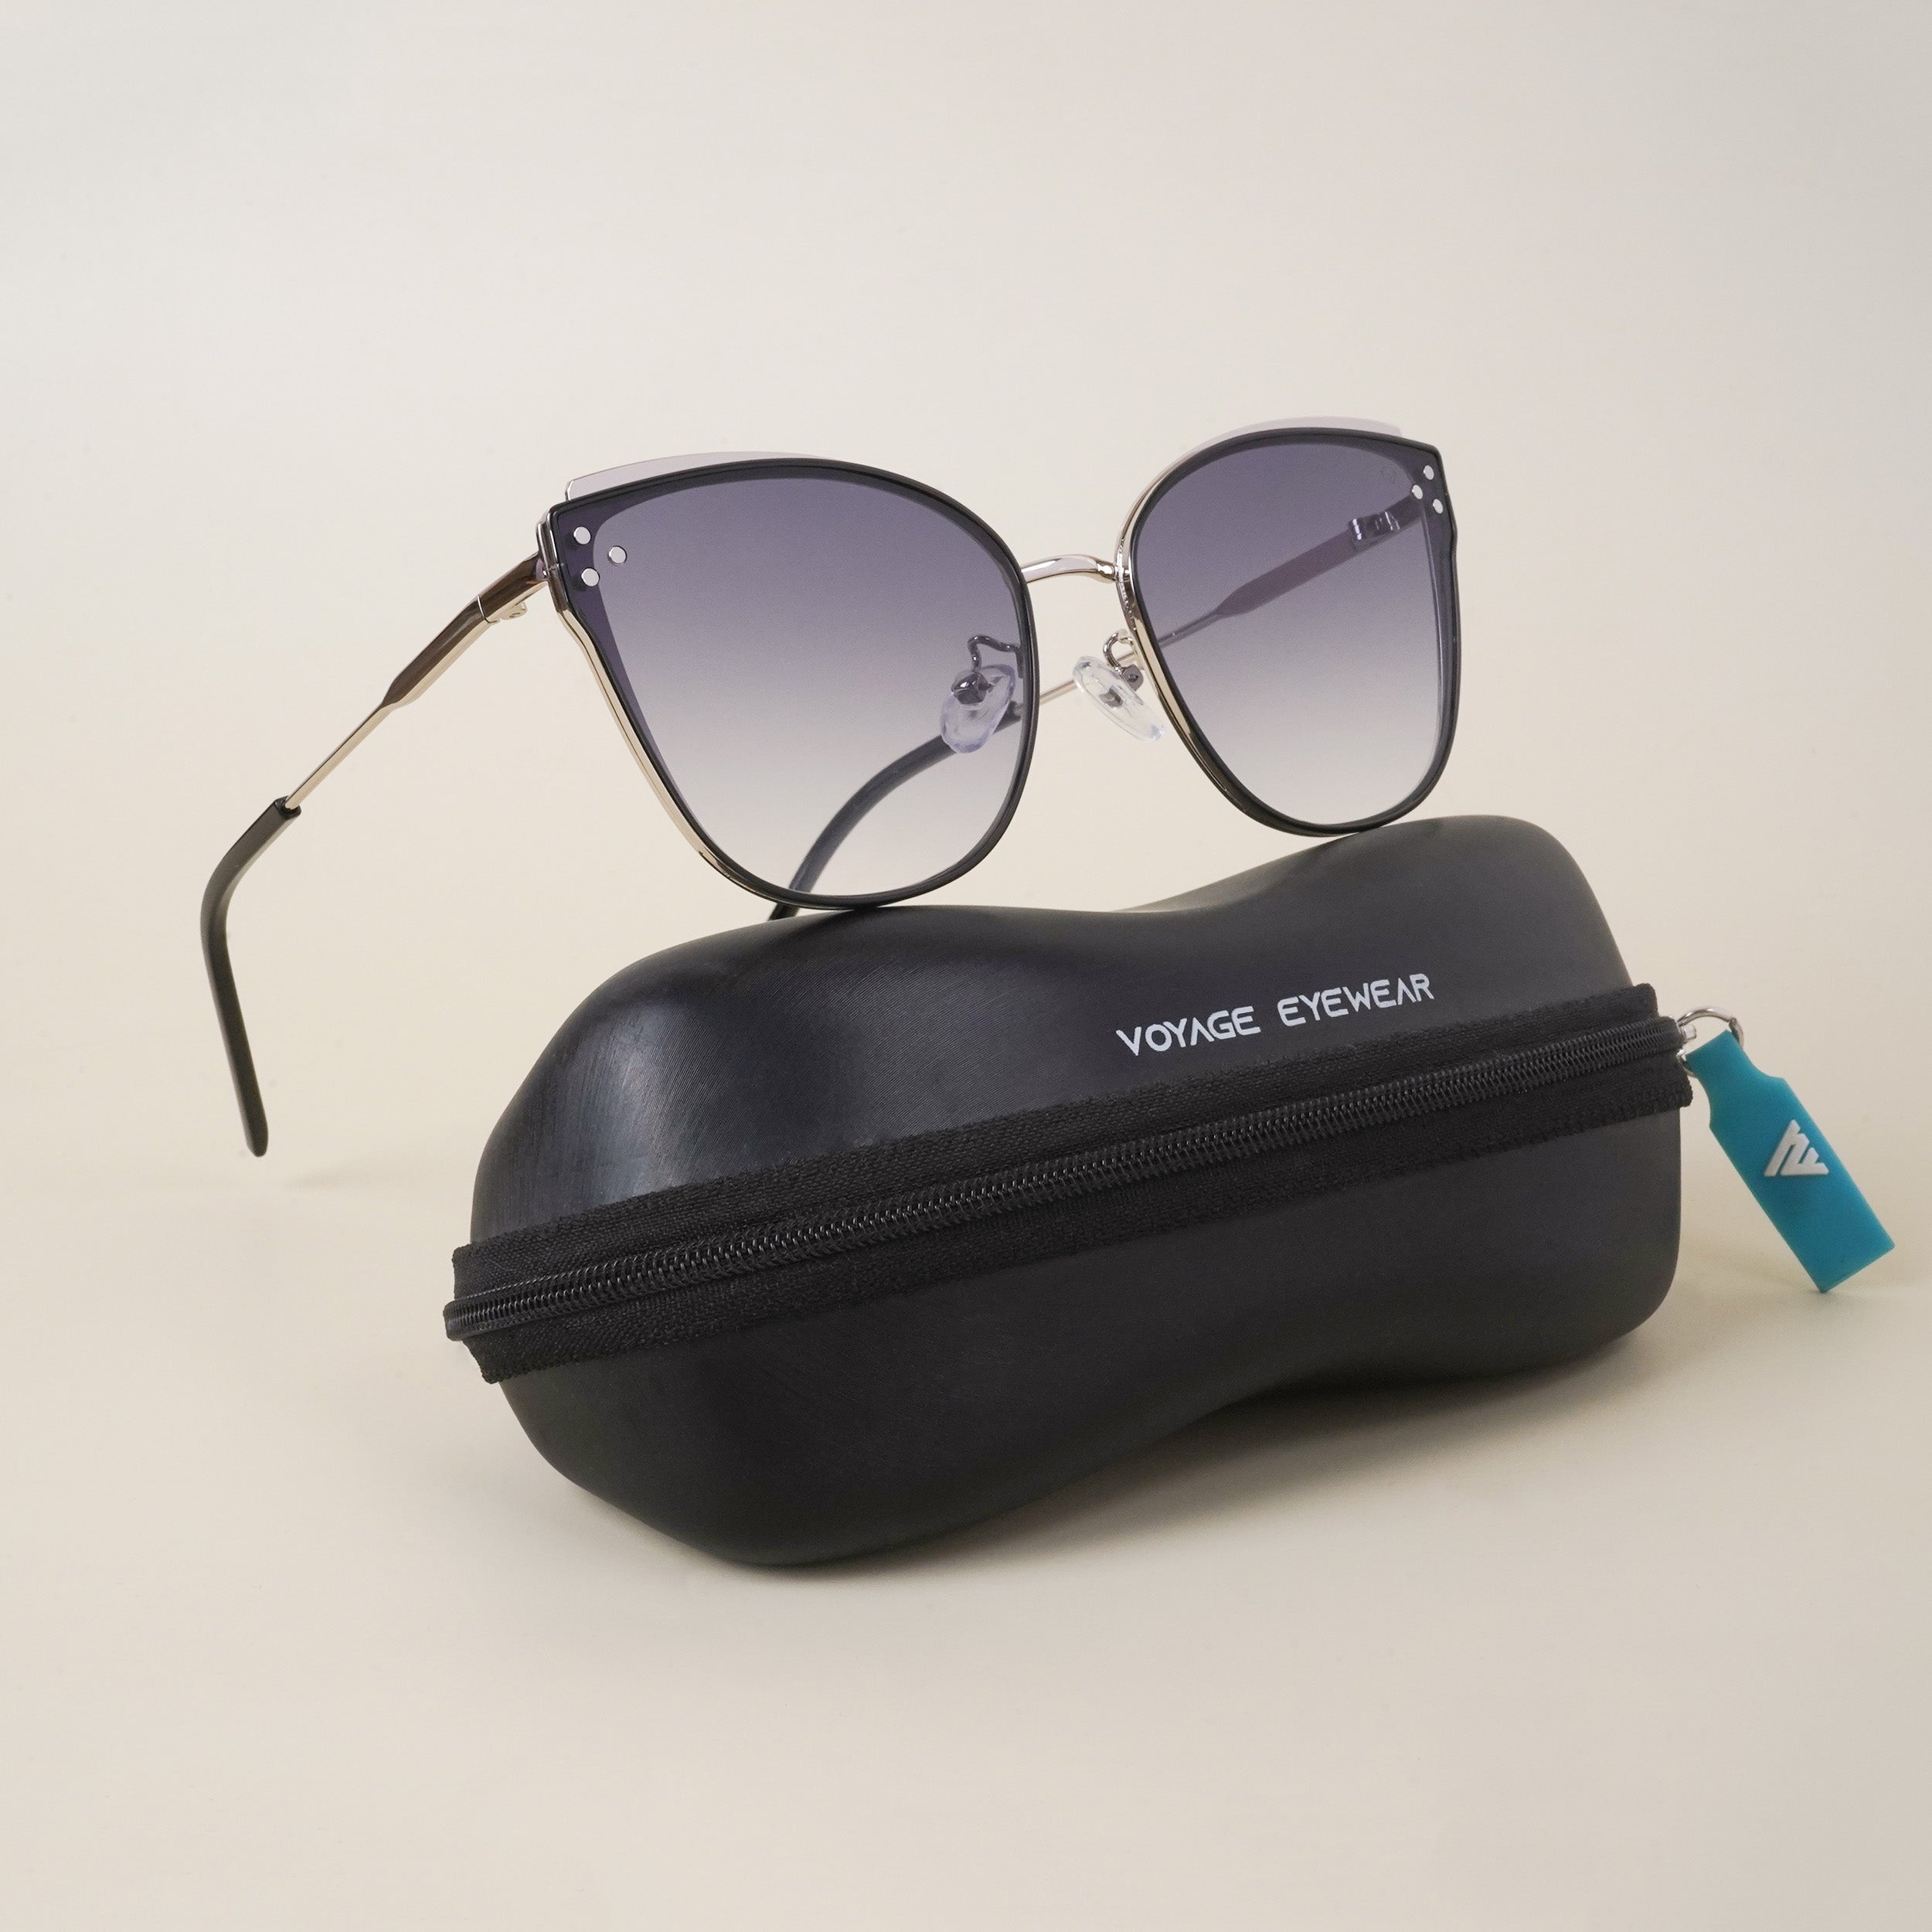 Voyage Cateye Grey Sunglasses MG2855